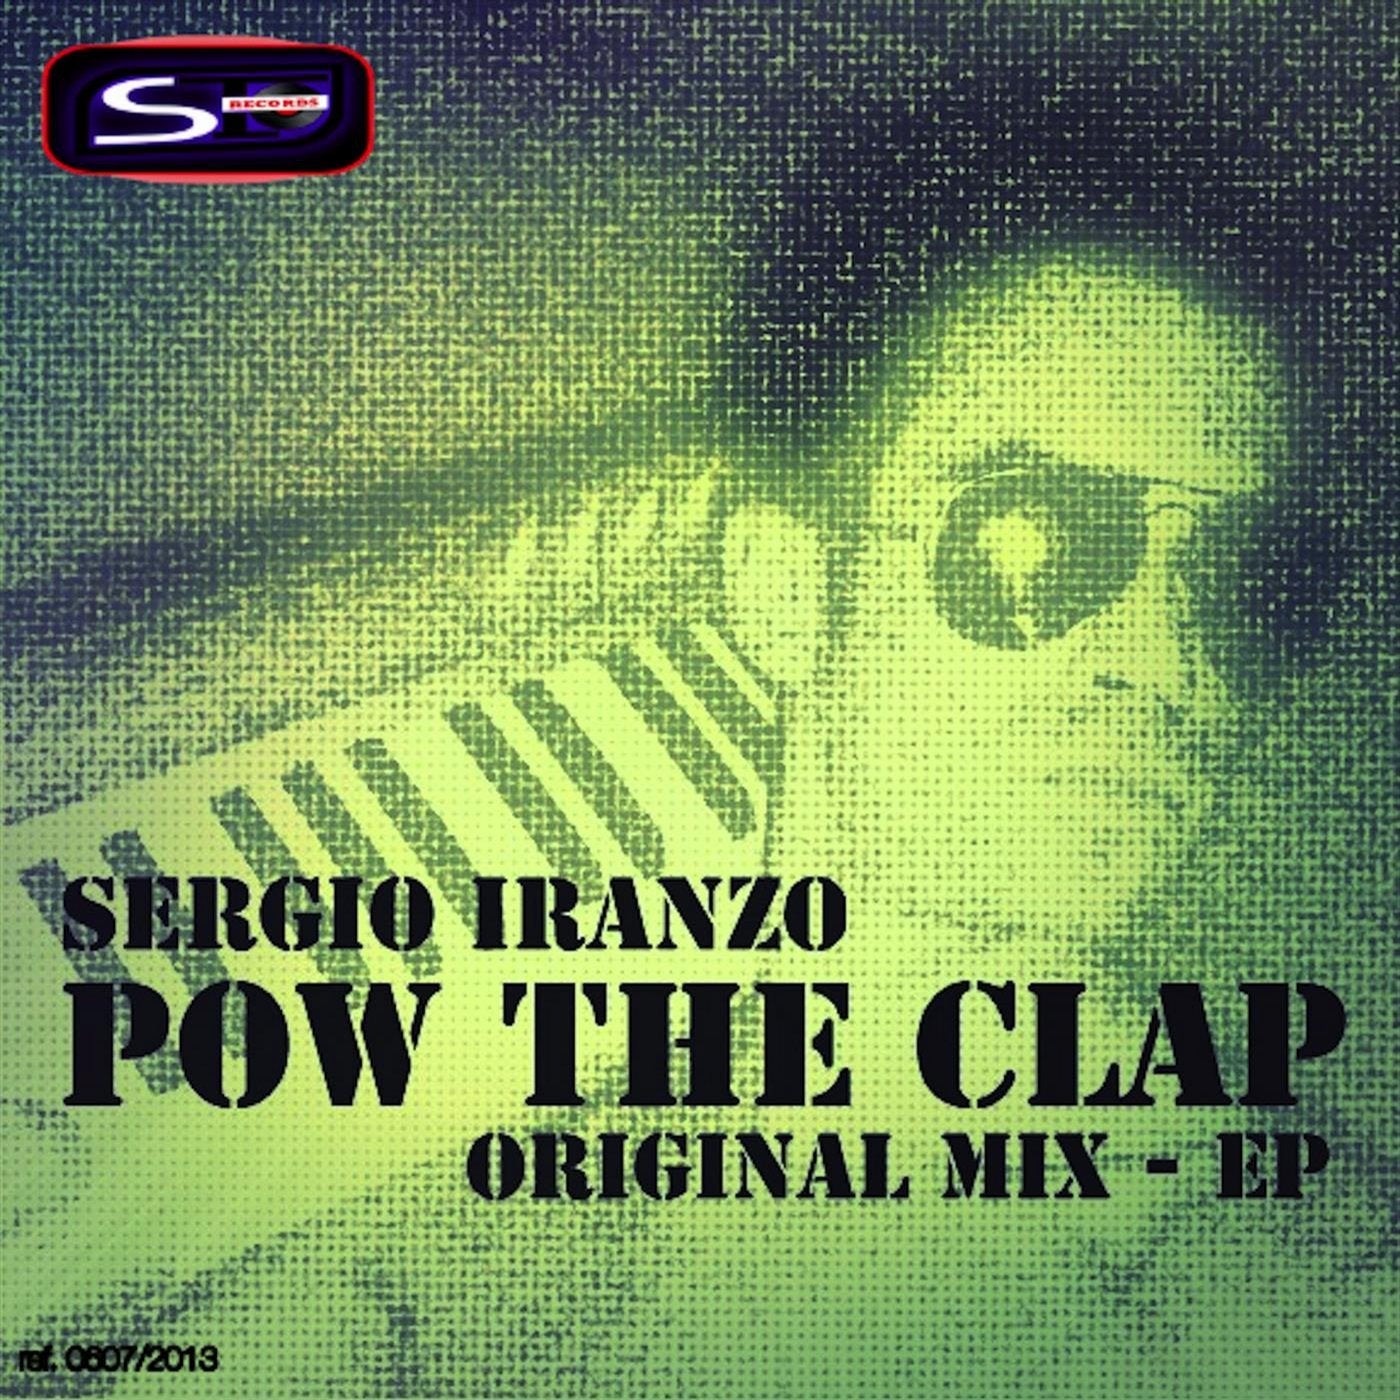 Pow the Clap - Original Mix